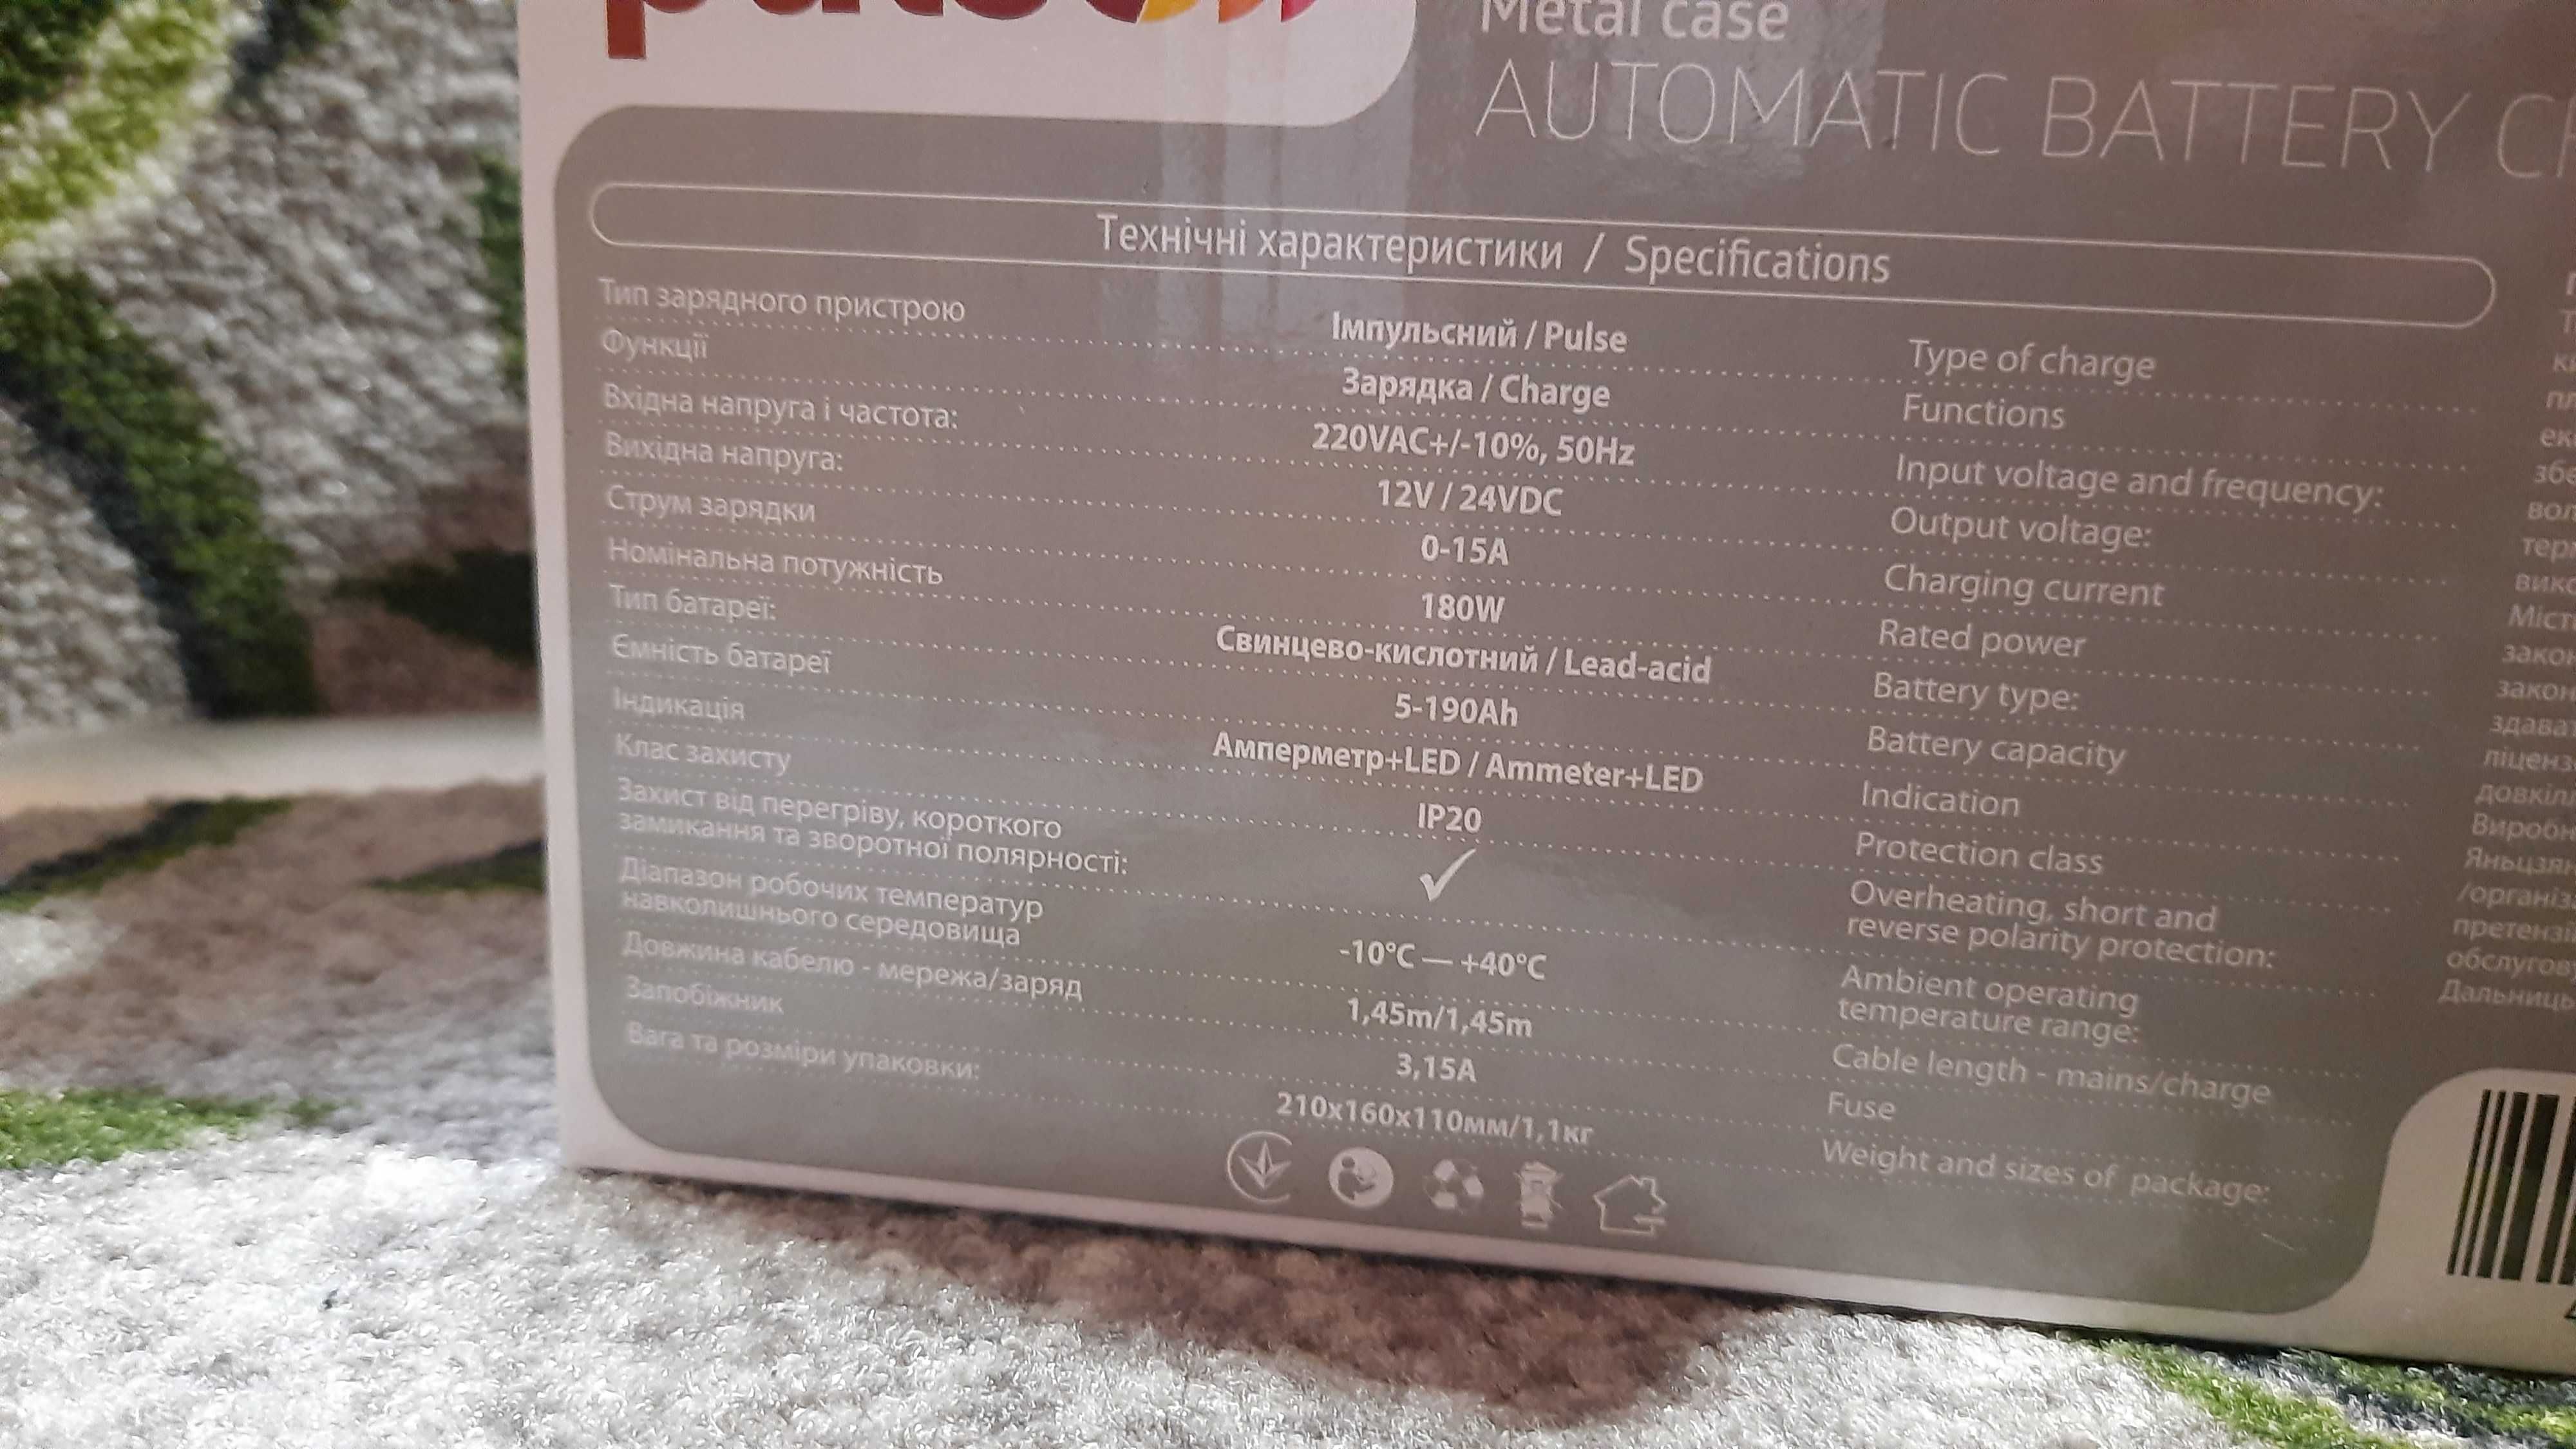 Pulso-12245 зарядное устройство 5-190 амп/час для всех аккумуляторов